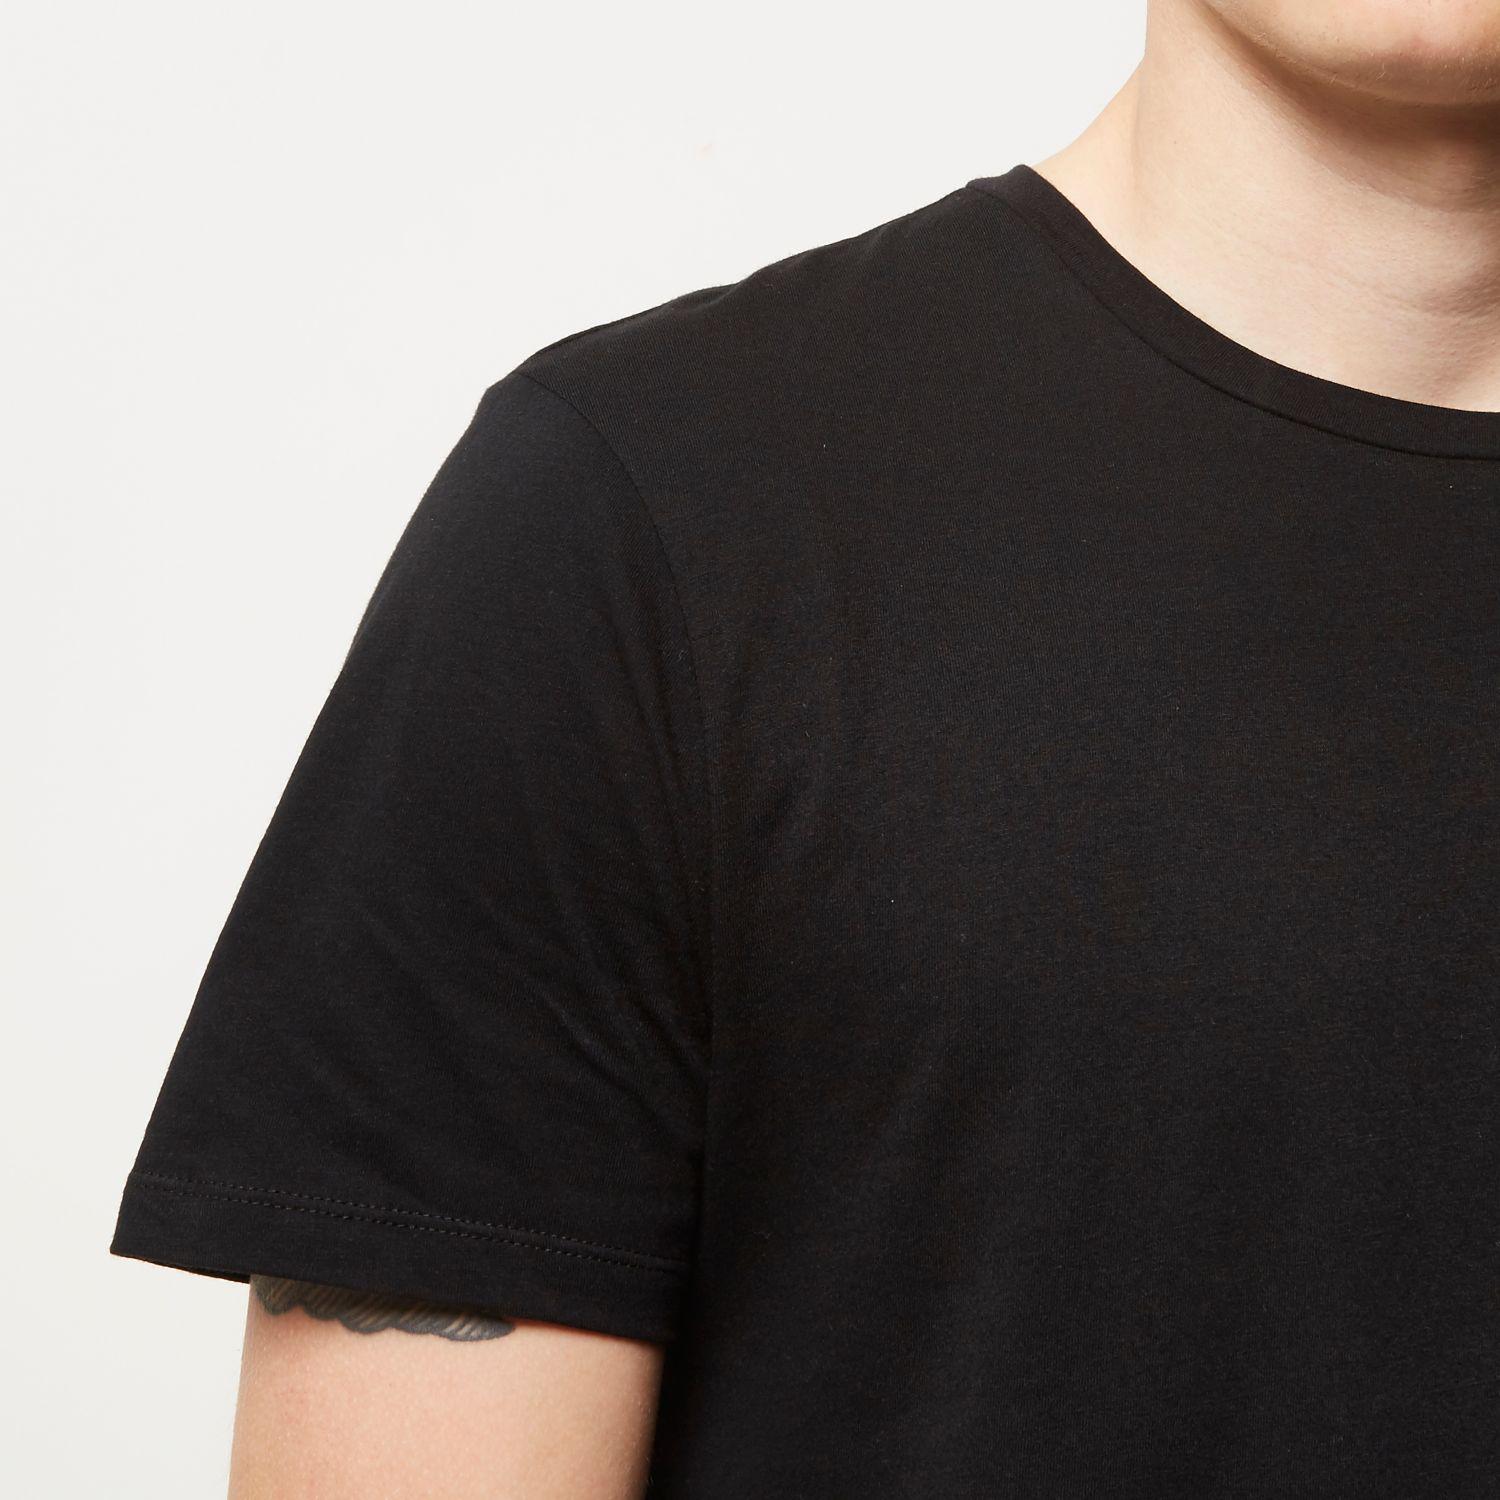 River Island Cotton Curved Hem Longline T-shirt in Black for Men - Lyst